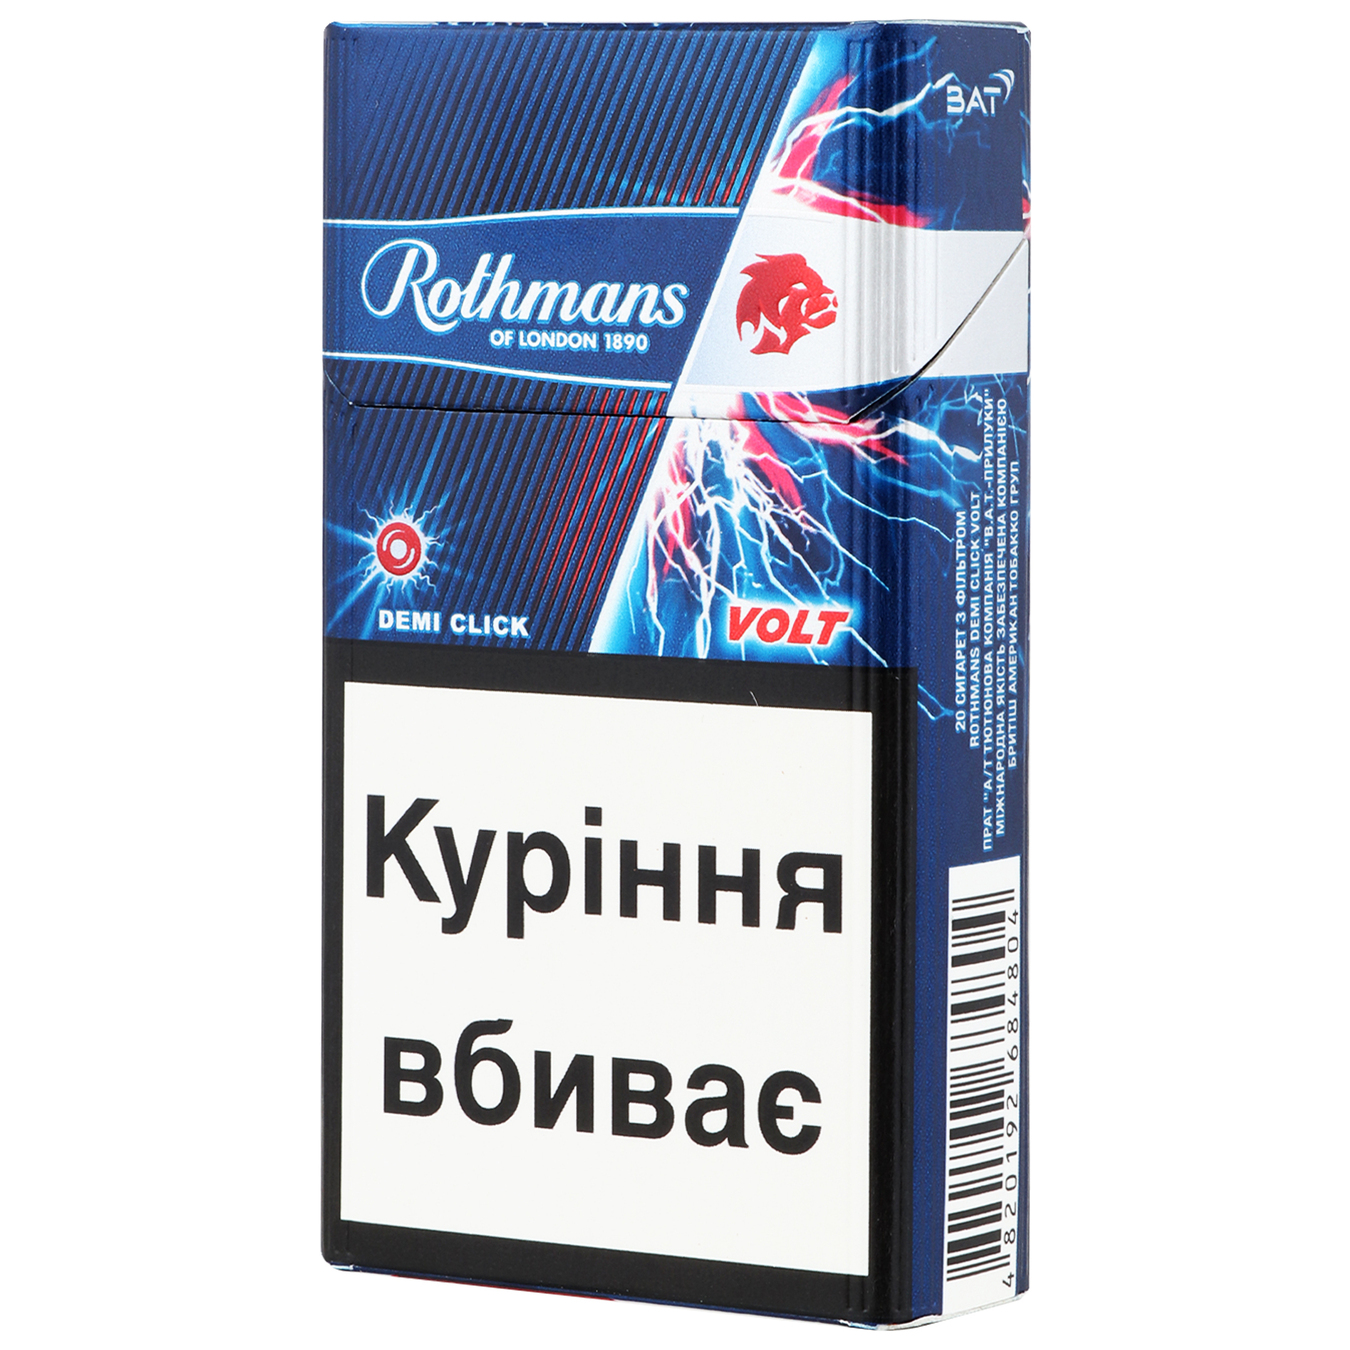 Сигареты Rothmans Demi Click Volt 20шт (цена указана без акциза) 2